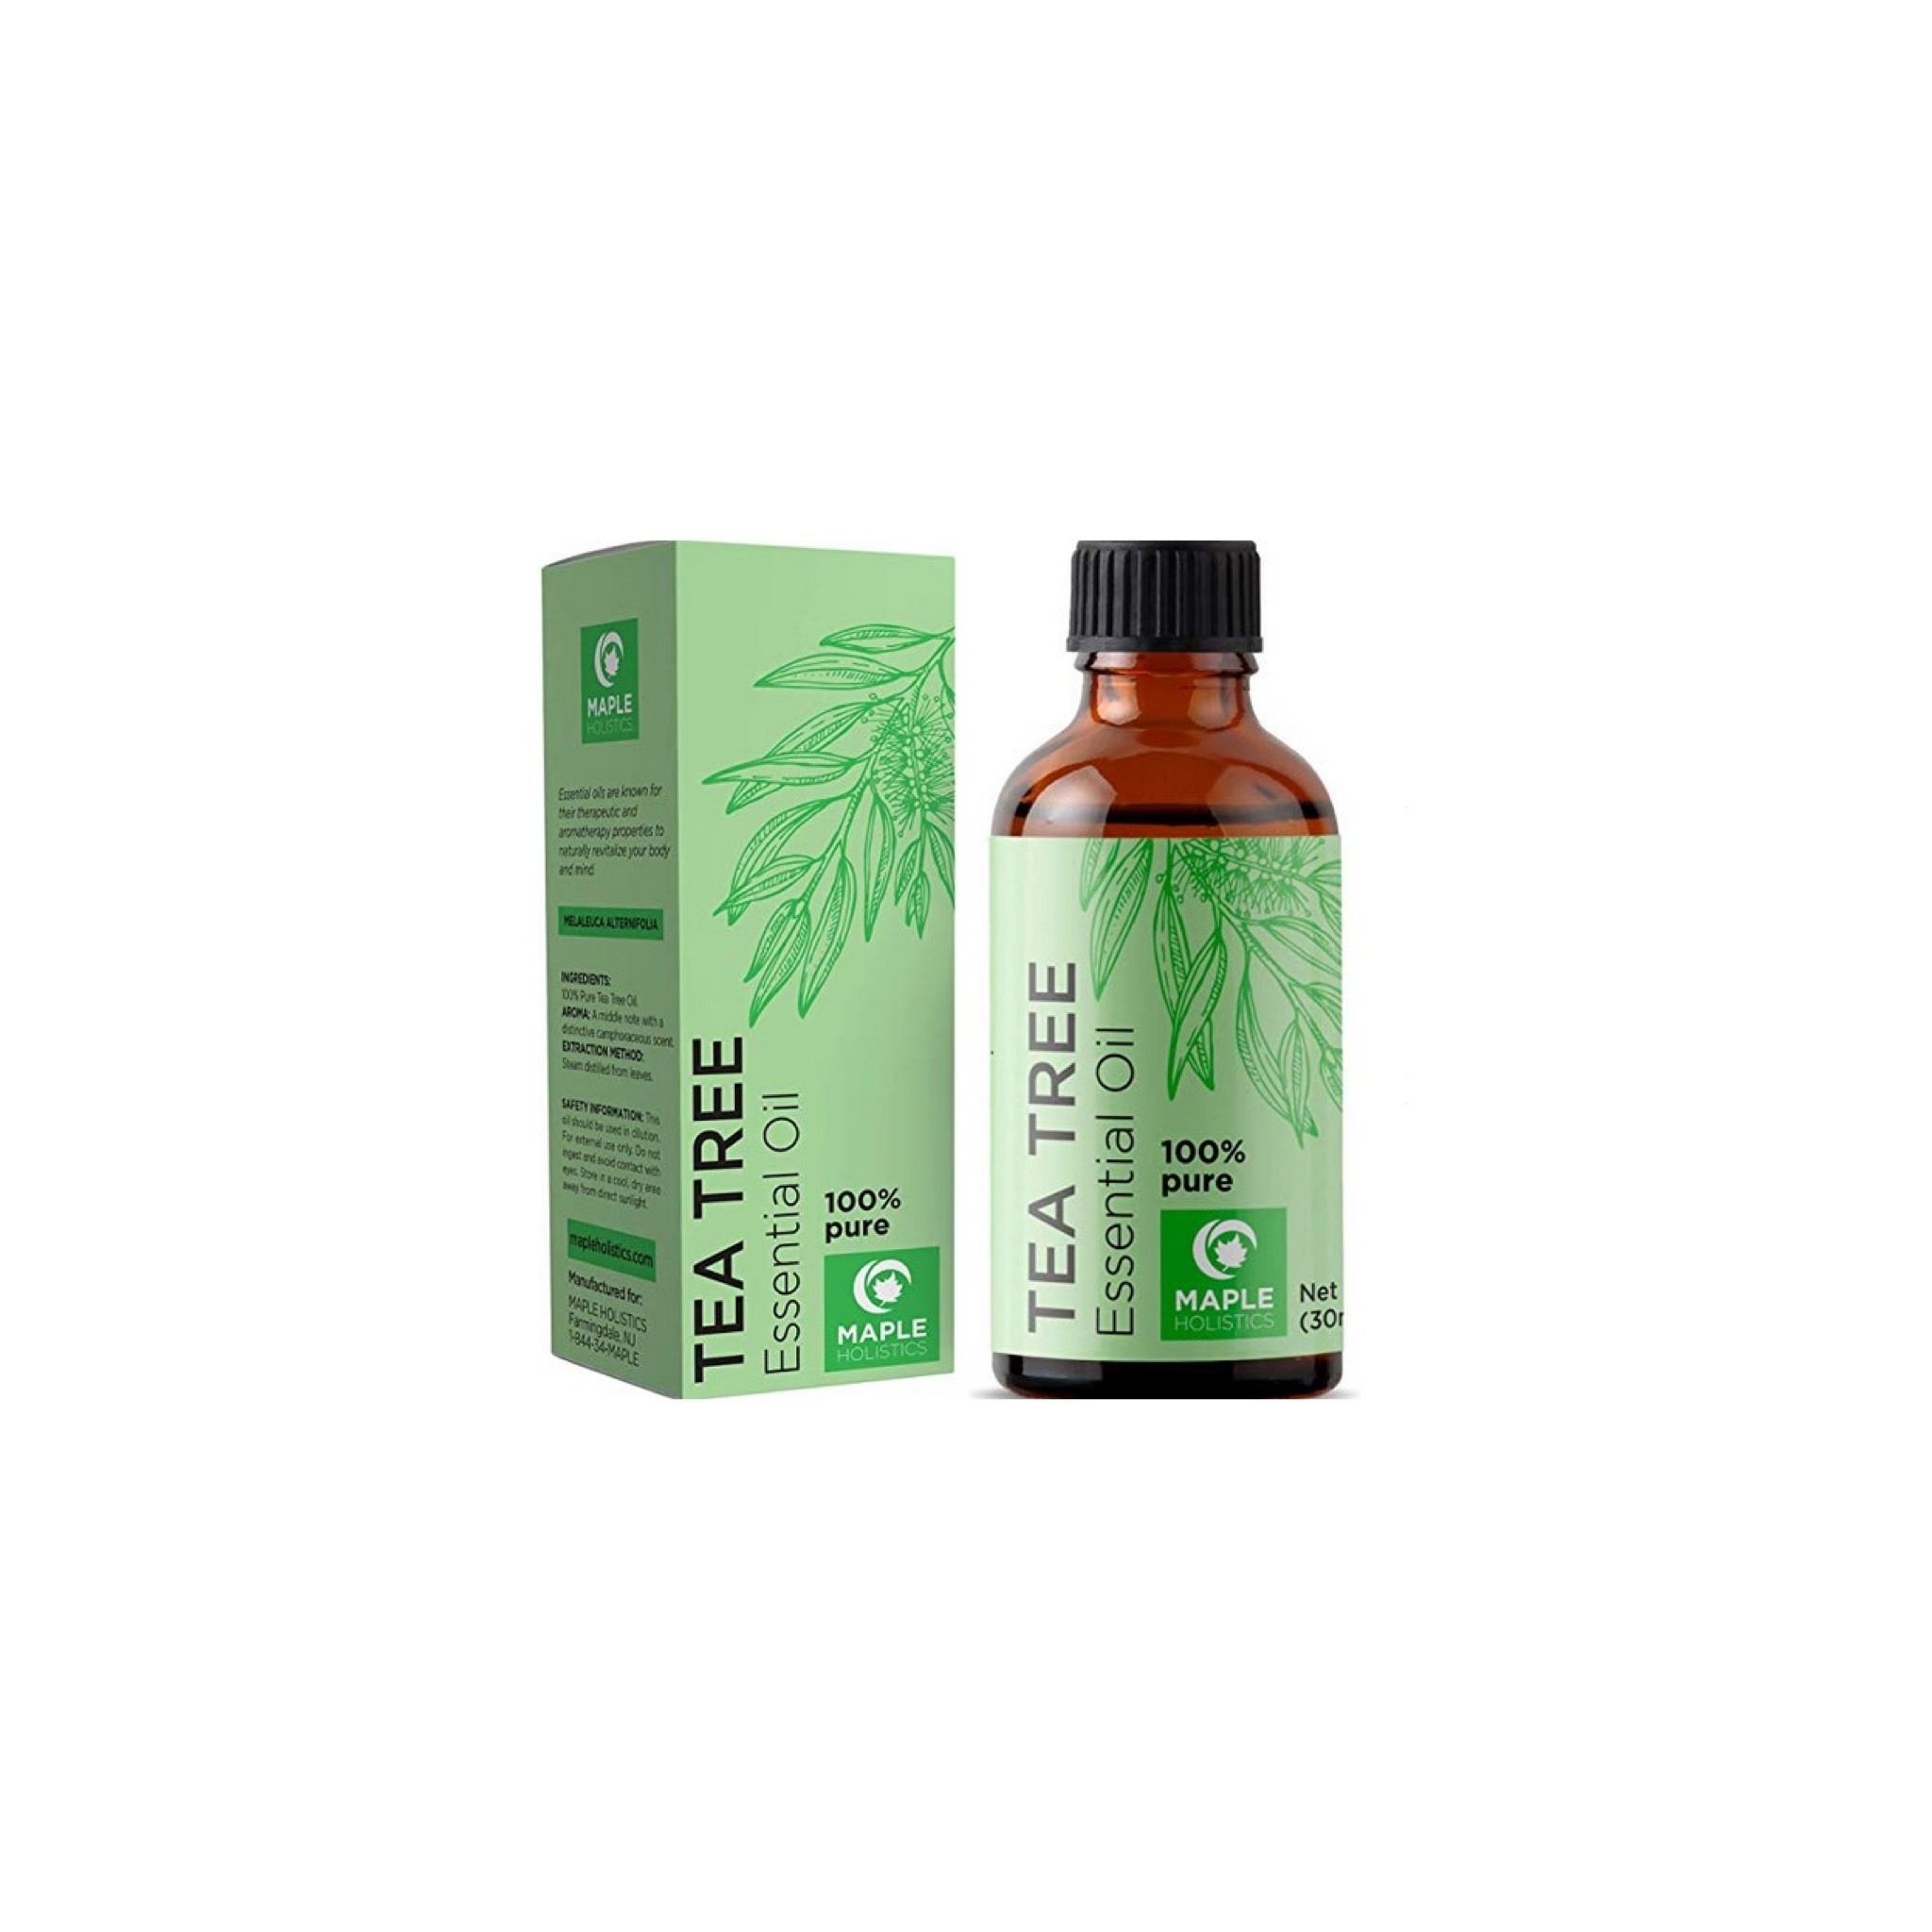 100% Pure Tea Tree Oil Natural Essential Oil with Antifungal Antibacterial Benefits